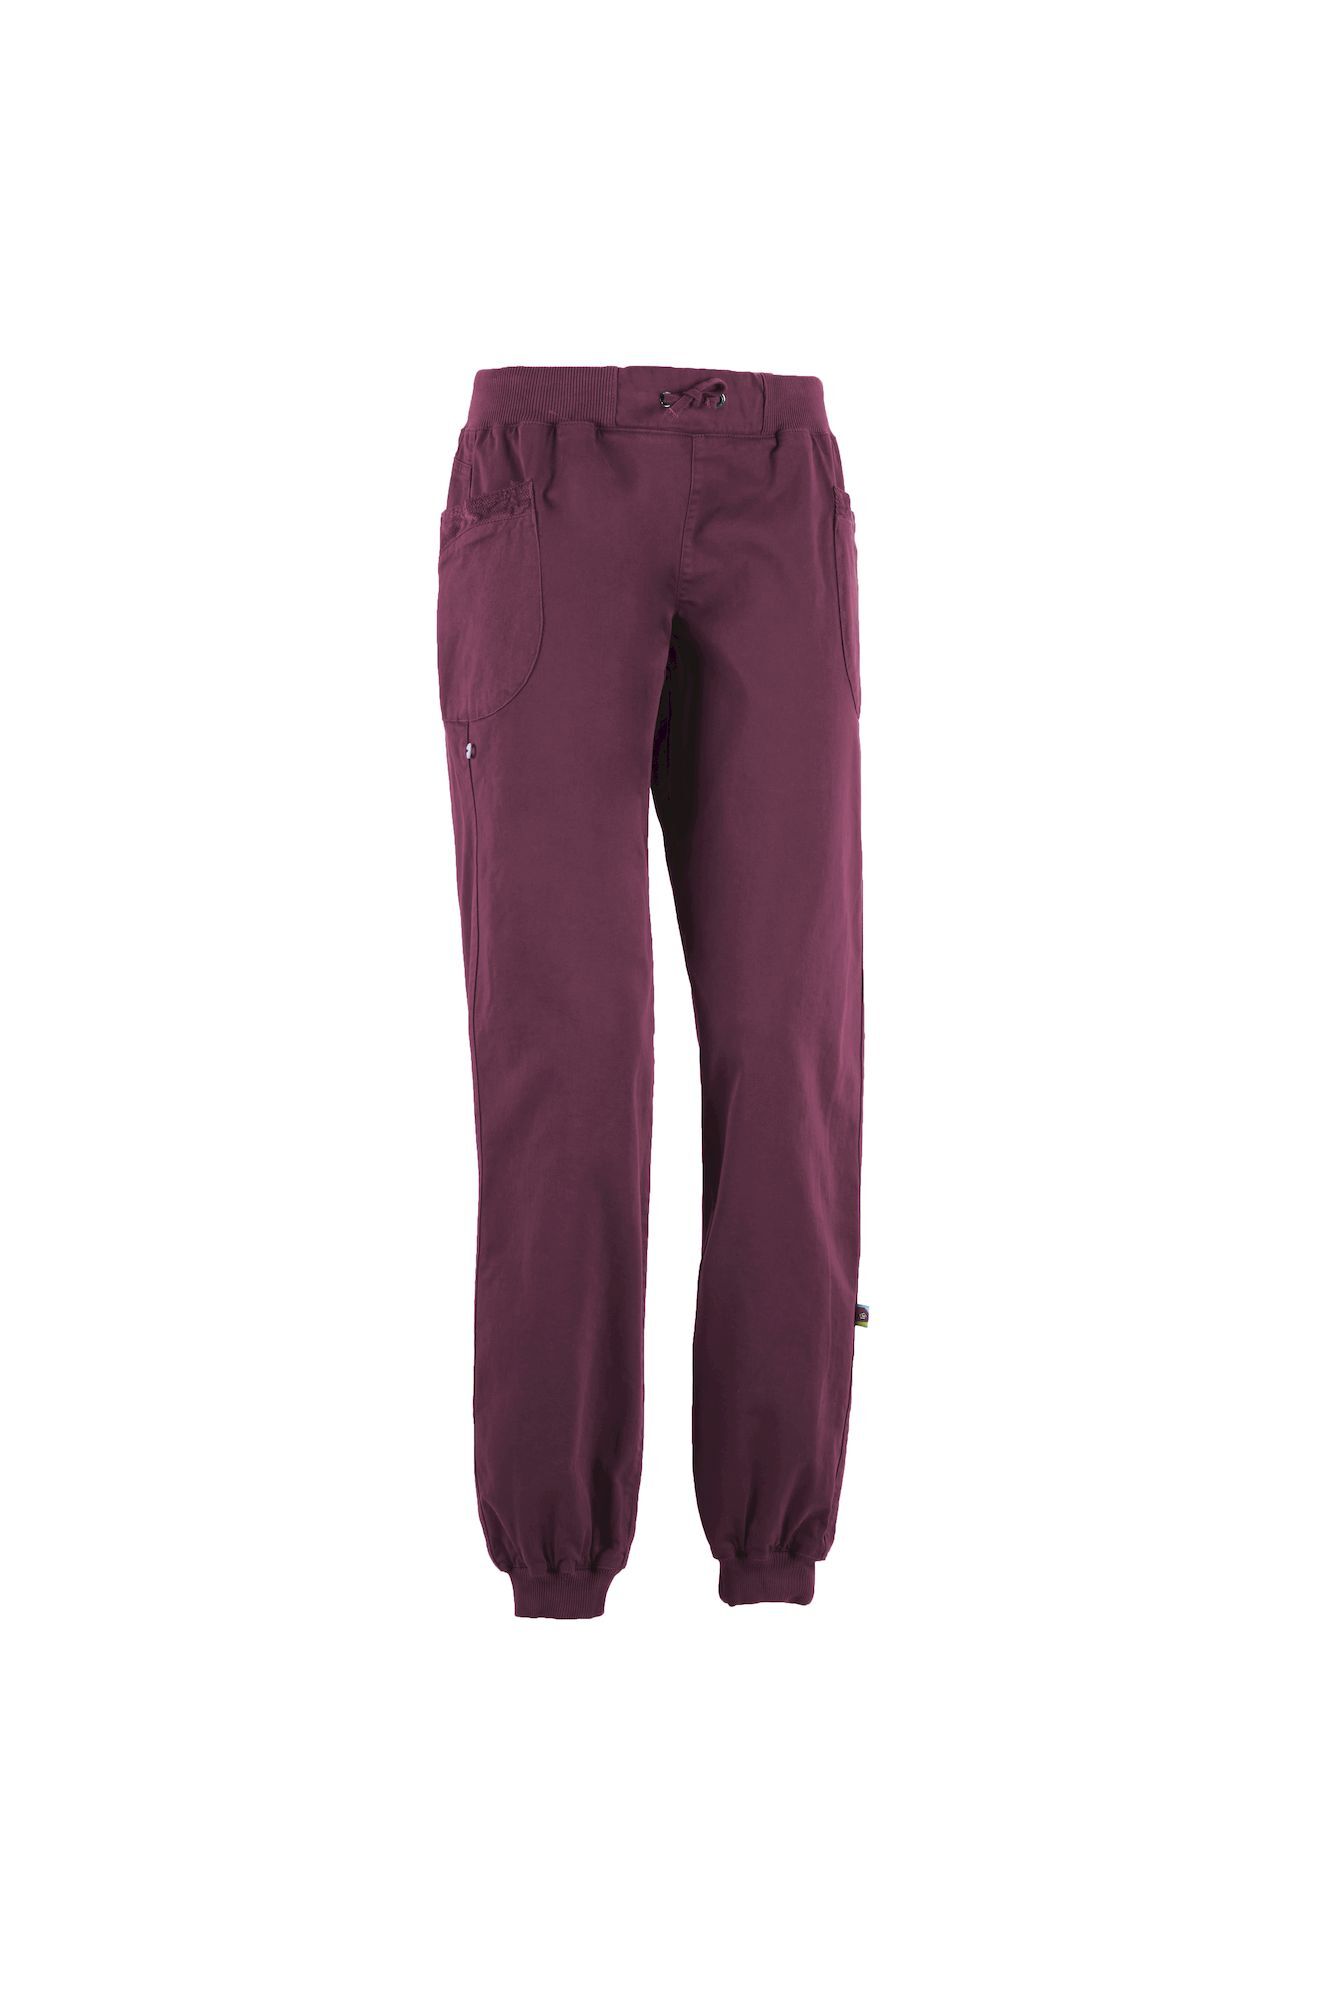 E9 Joy 2.3 - Climbing trousers - Women's | Hardloop